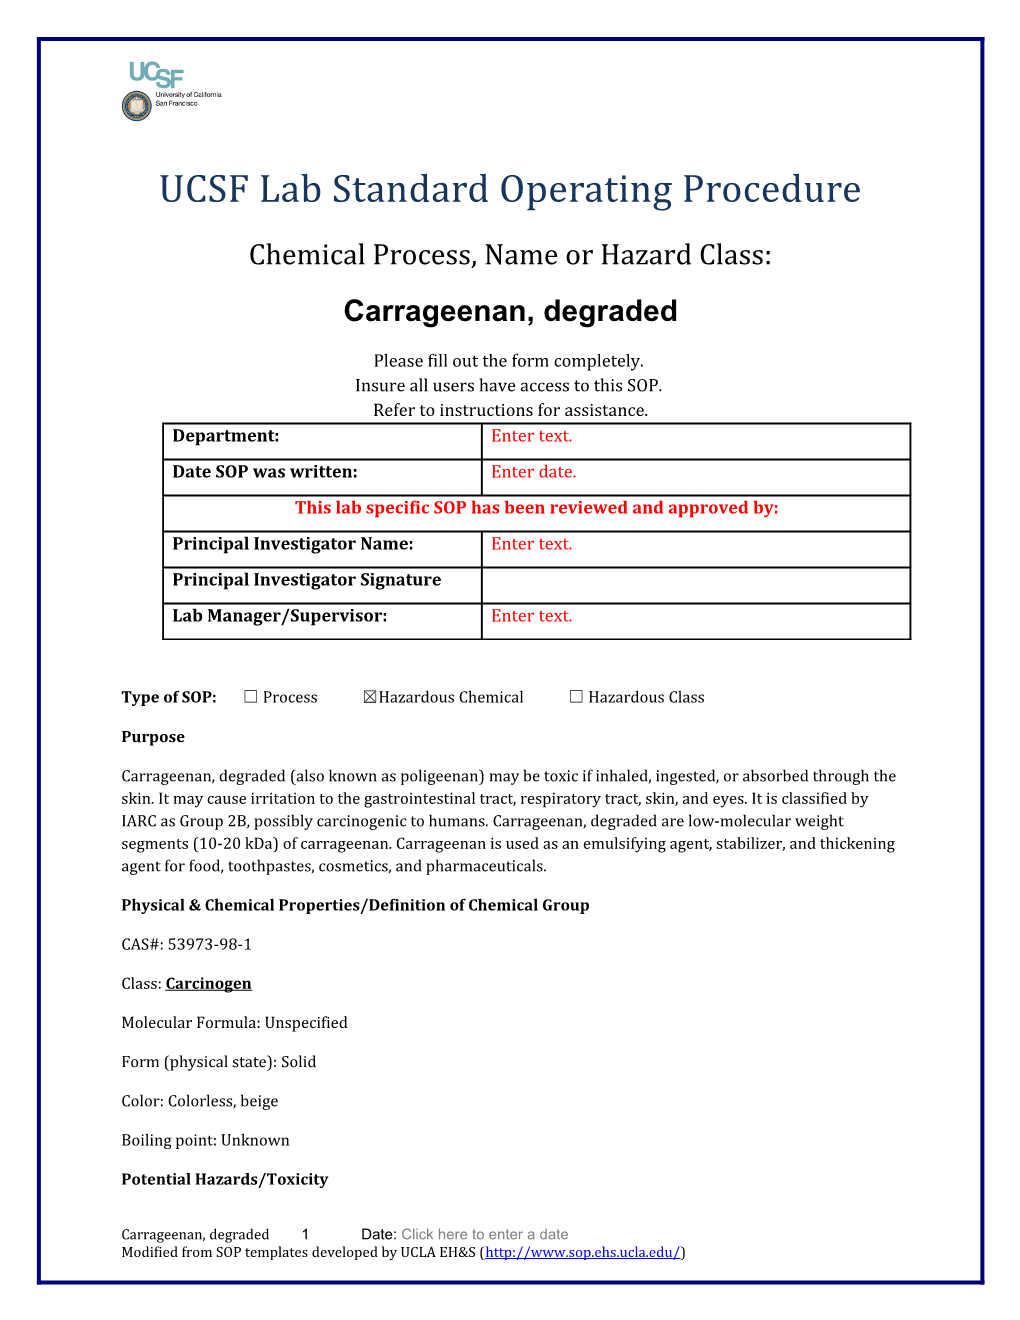 UCSF Lab Standard Operating Procedure s9